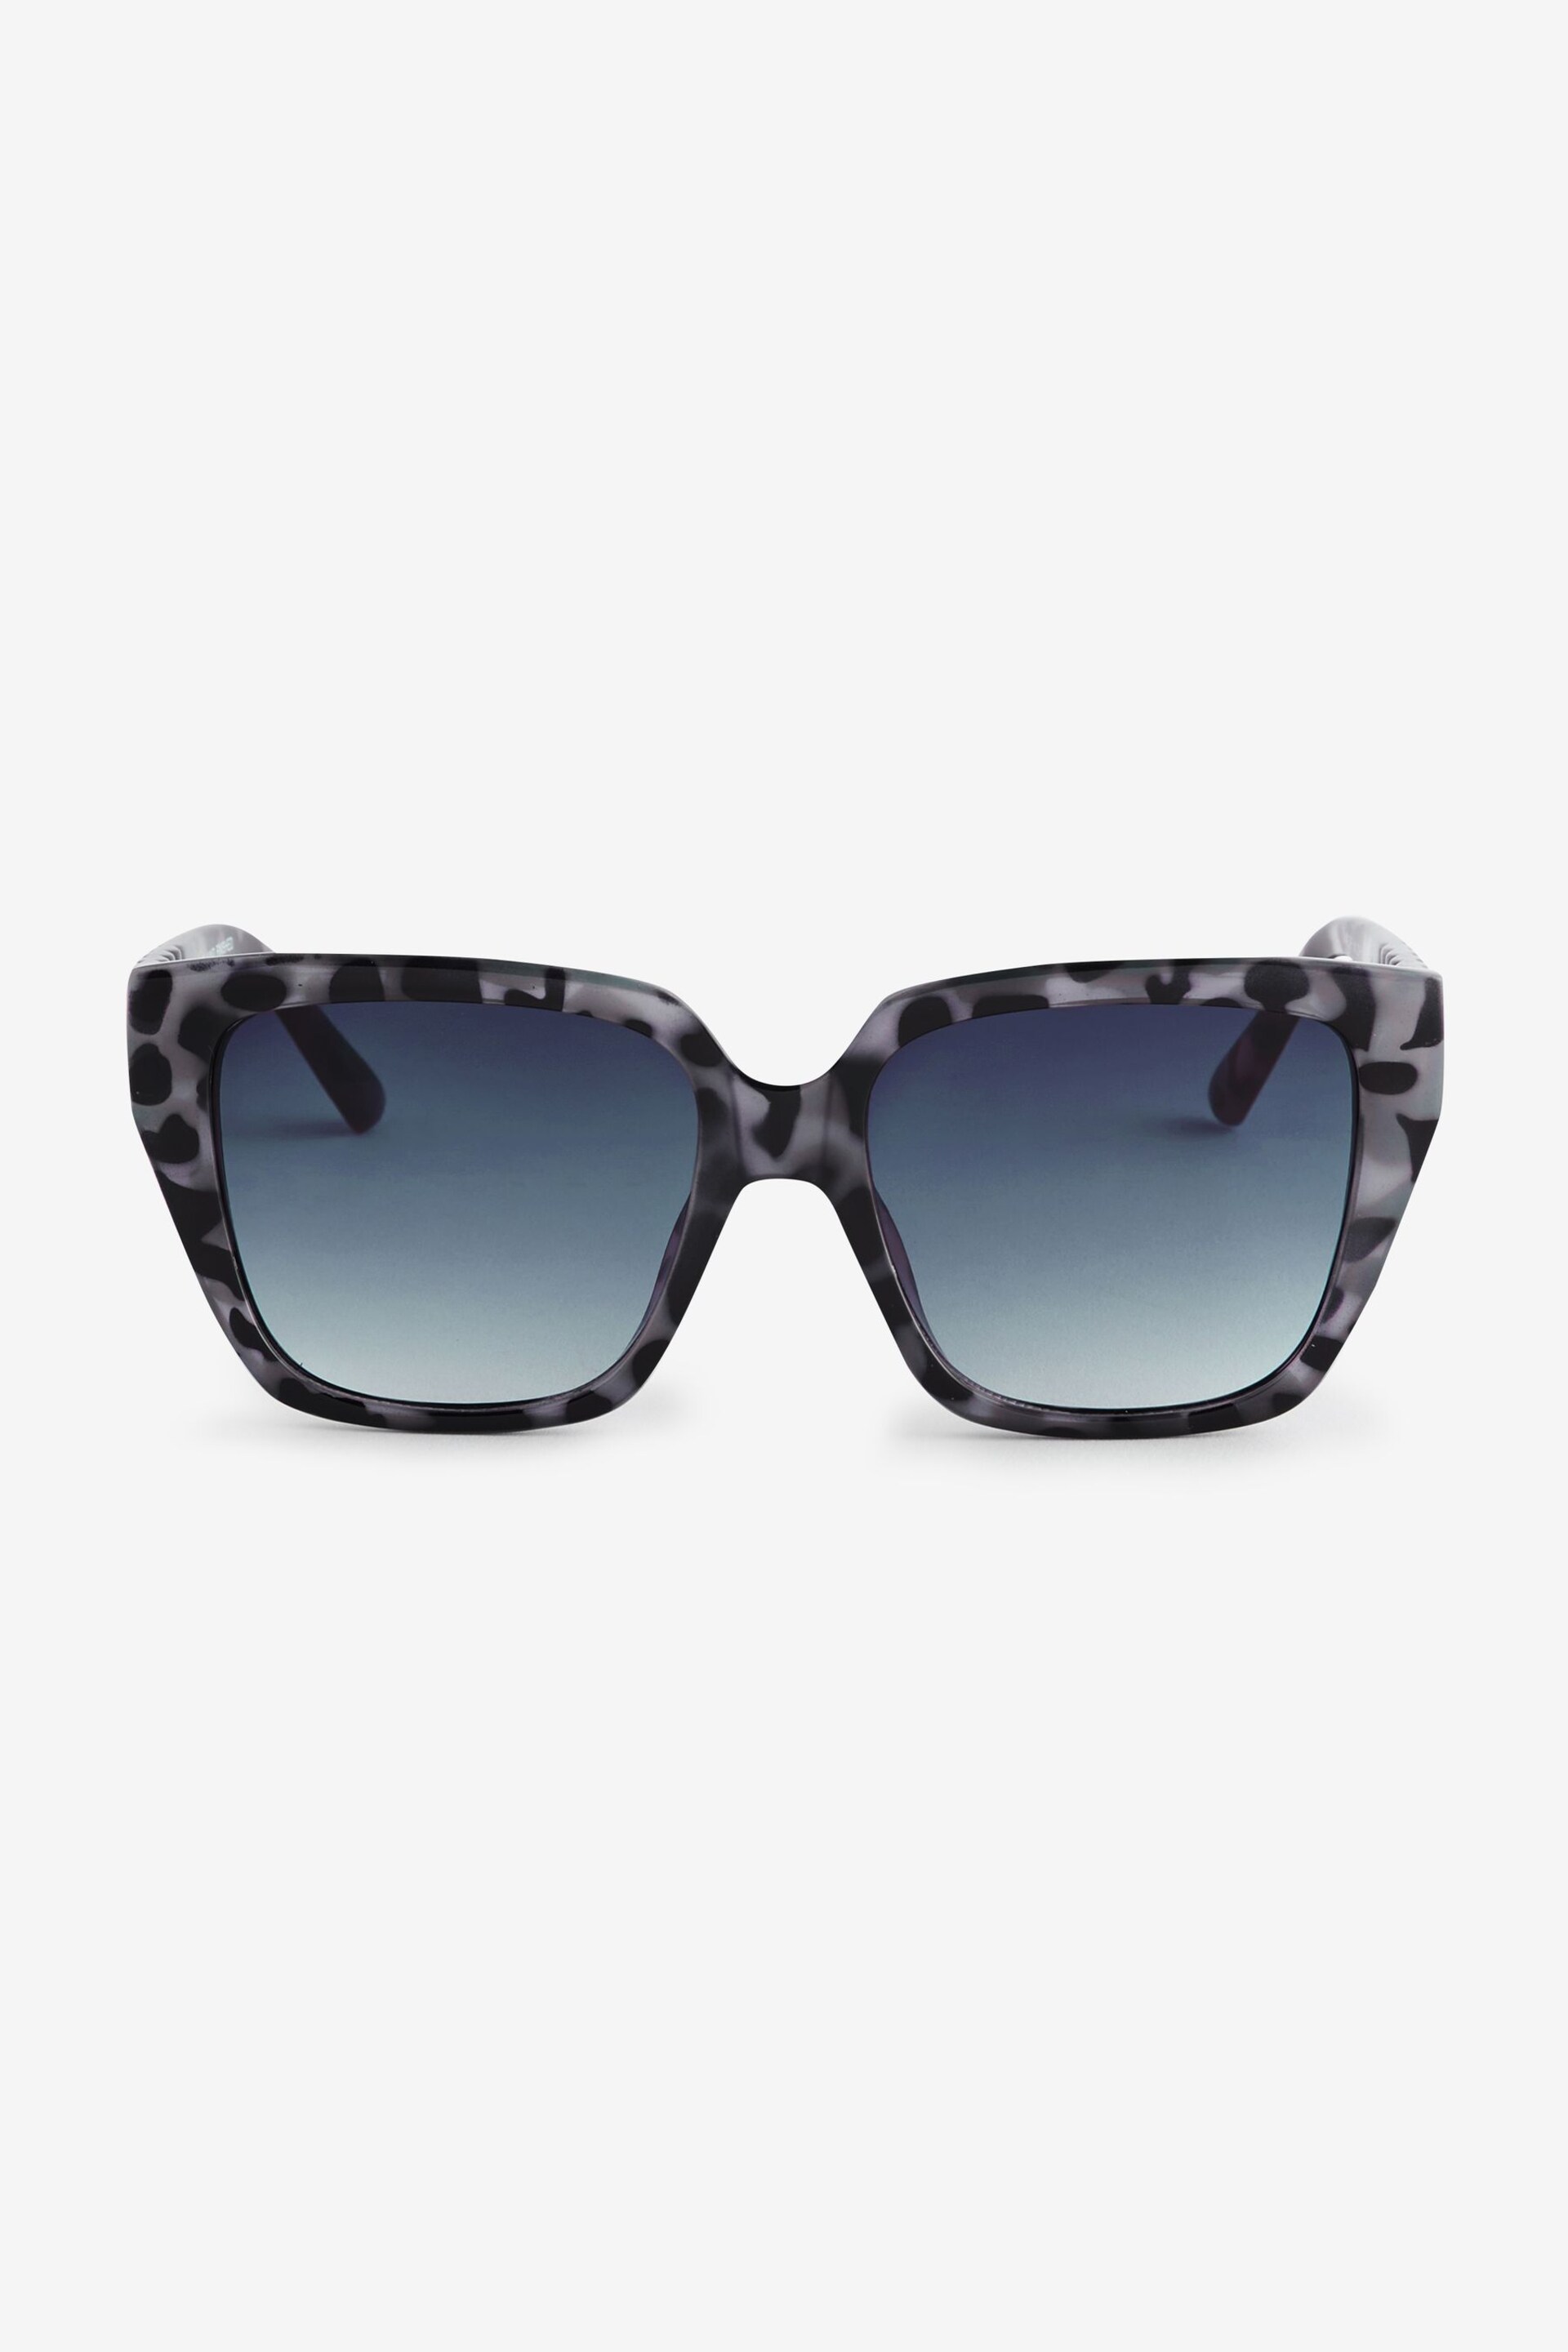 Grey Tortoishell Square Sunglasses - Image 4 of 6